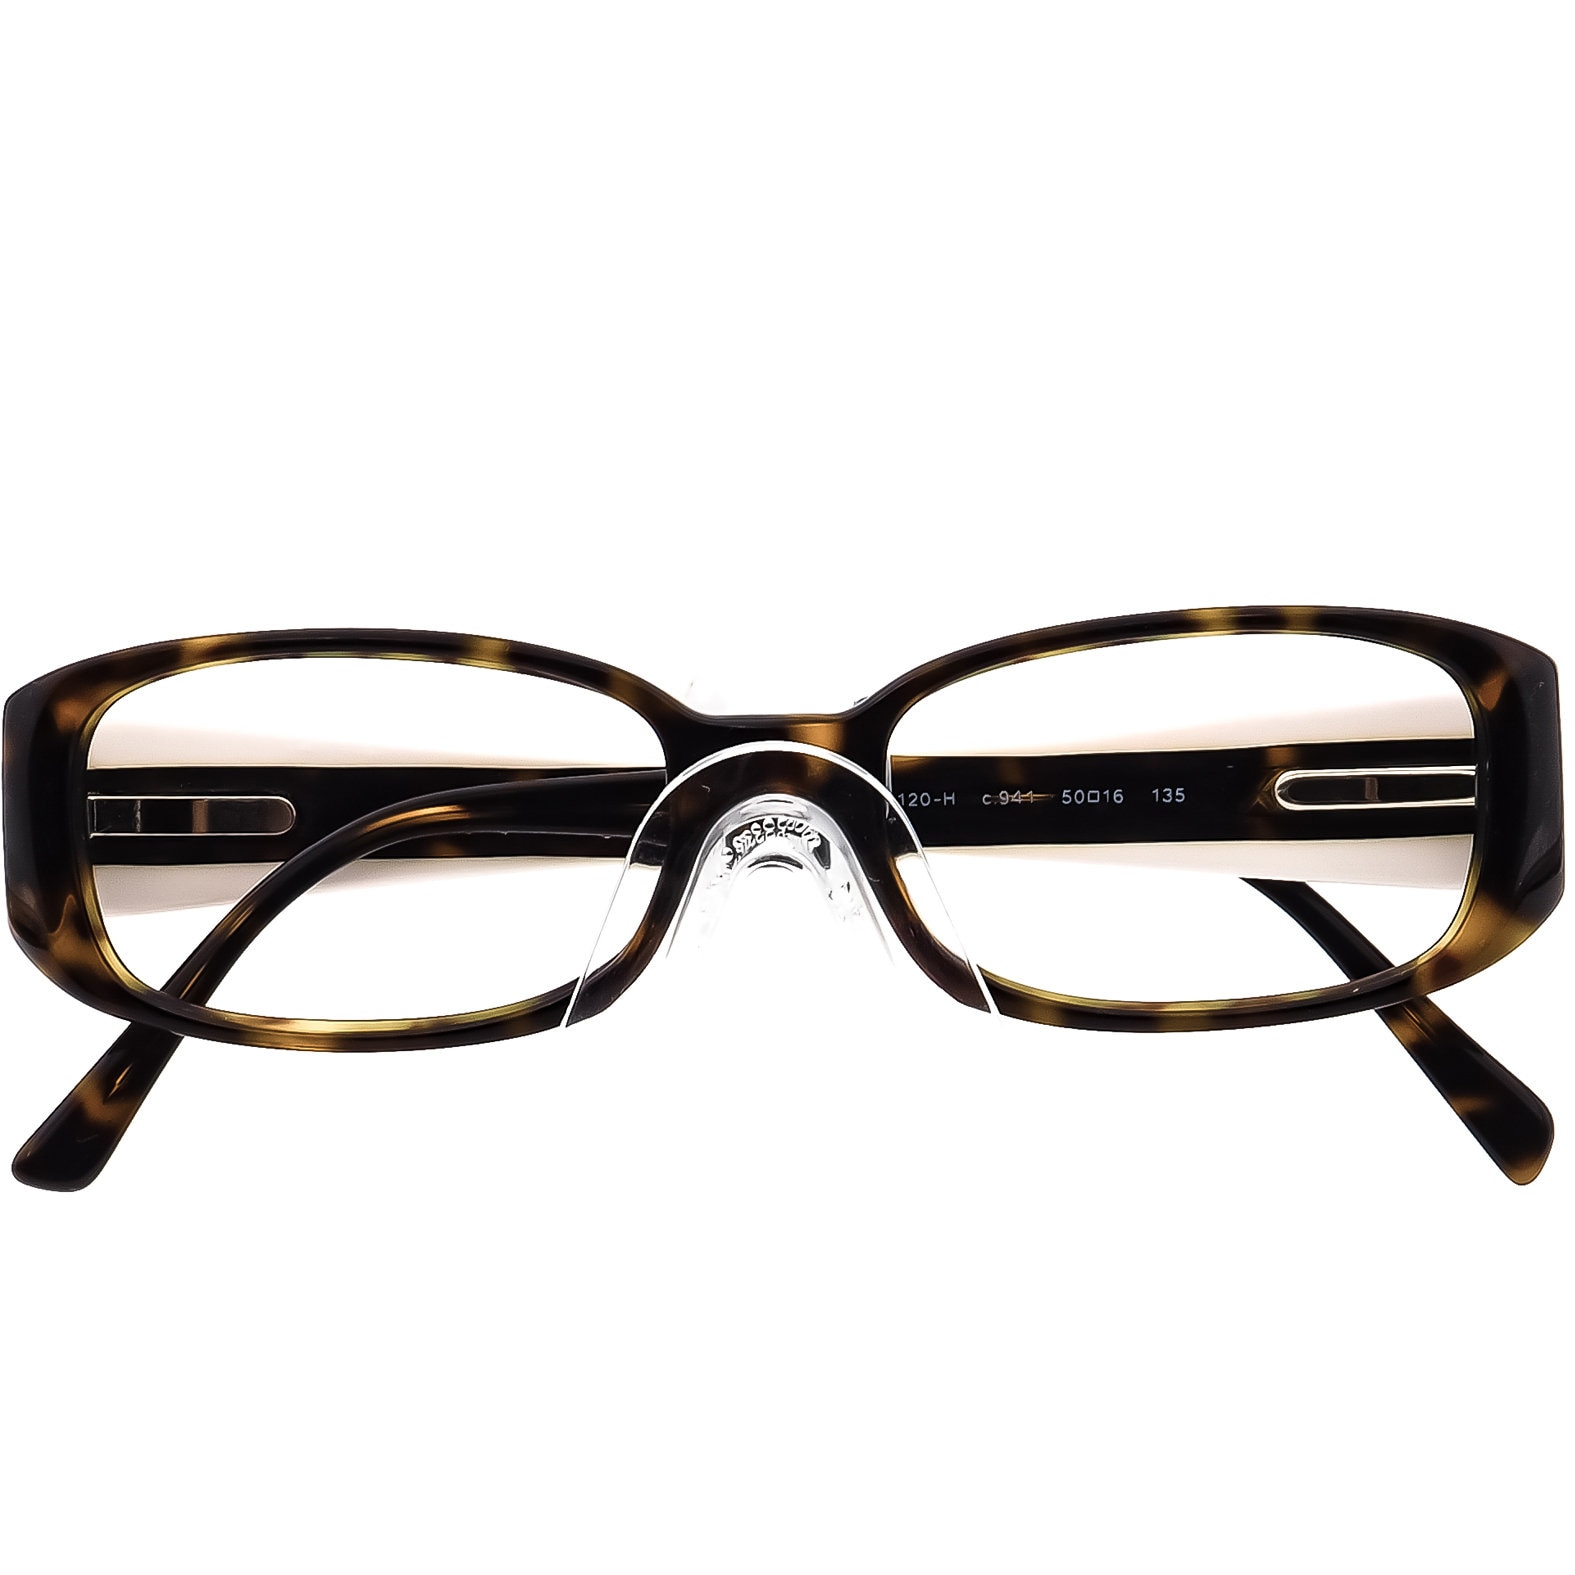 Chanel 3120-H c.941 Eyeglasses-ACY11-B19715-AH-R